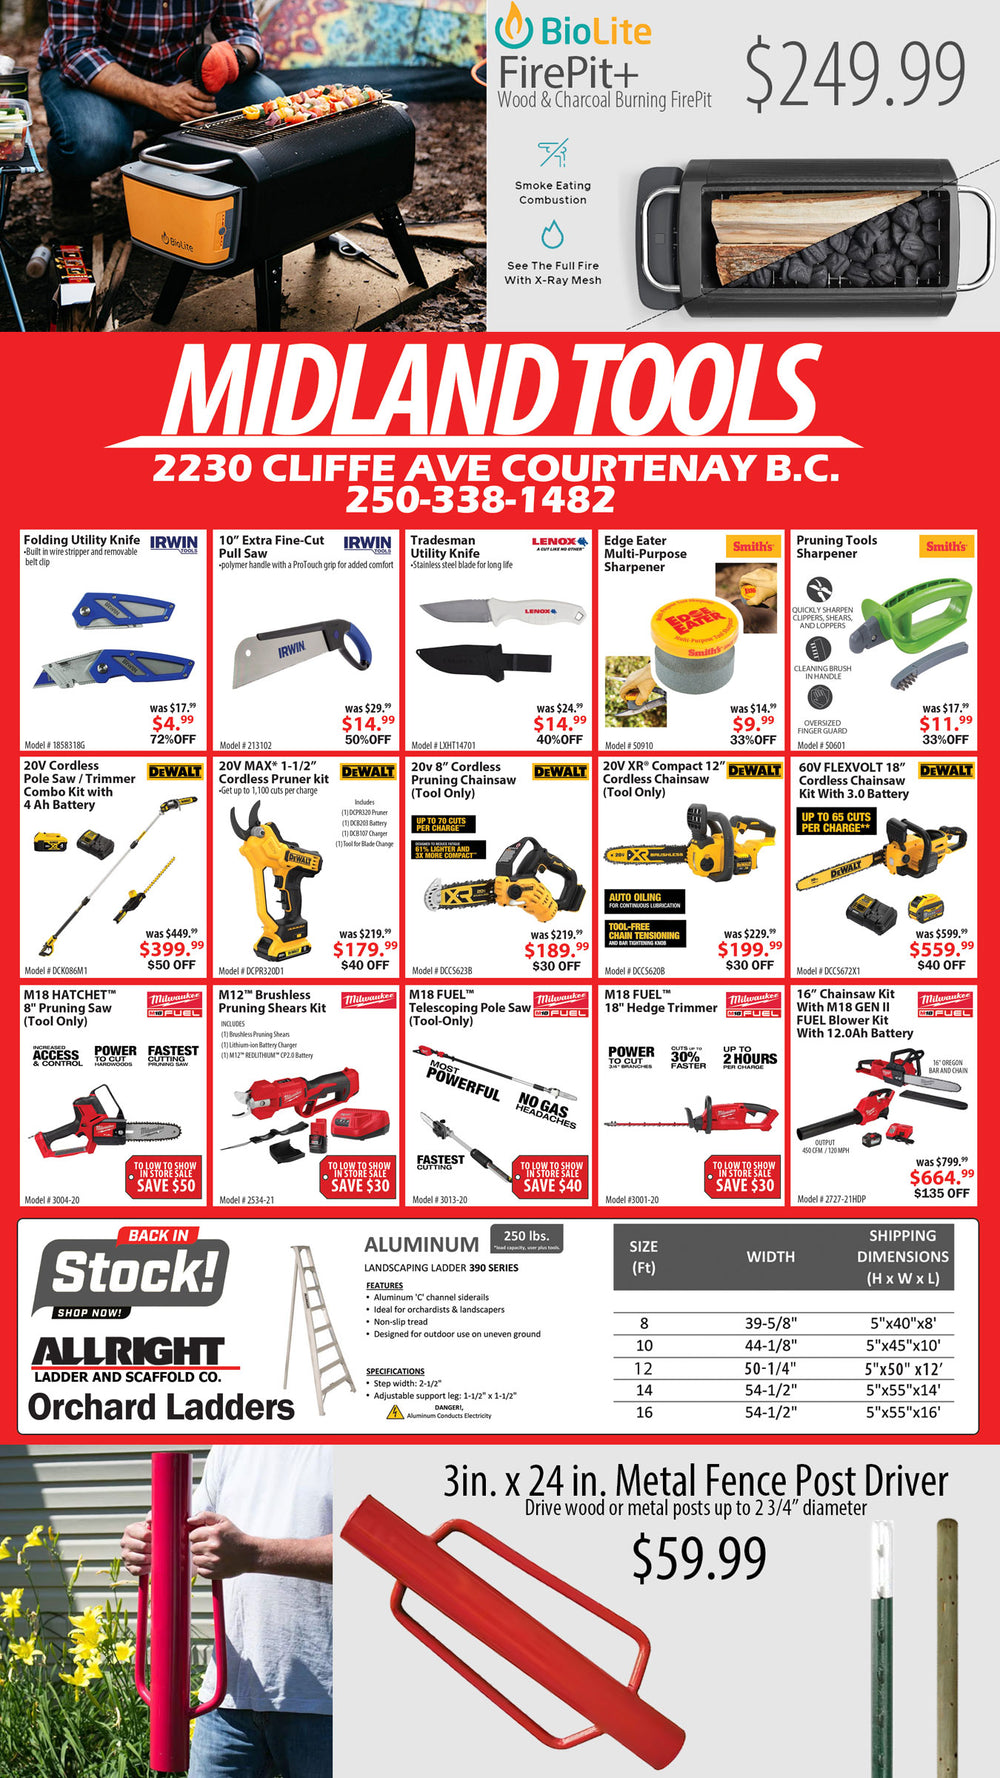 Midland Tools Courtenay